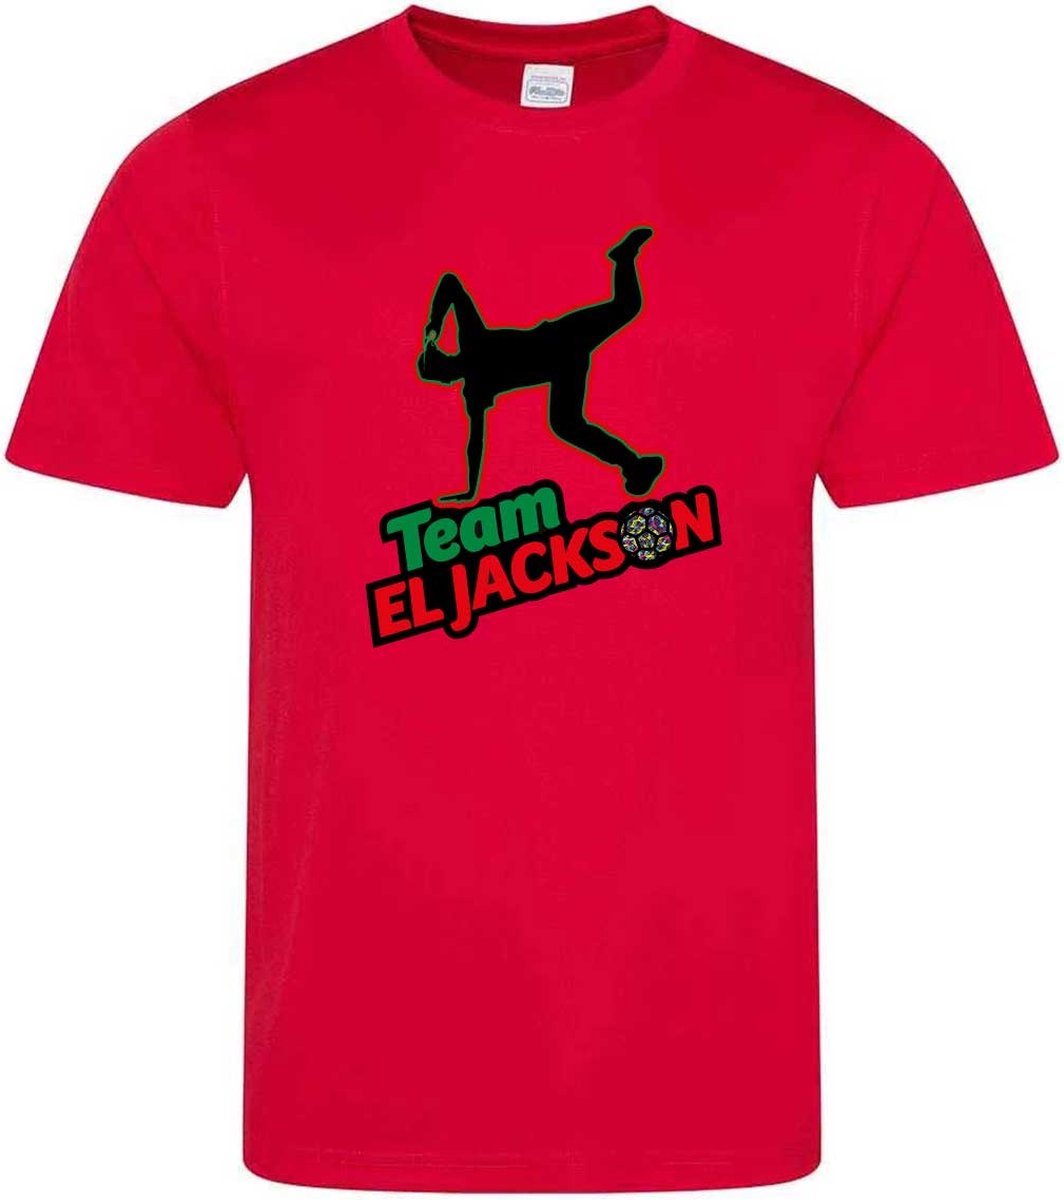 El Jackson T-Shirt - STRAWBERRY RED - (164-XXL) - VOETBALSHIRT - SPORTSHIRT